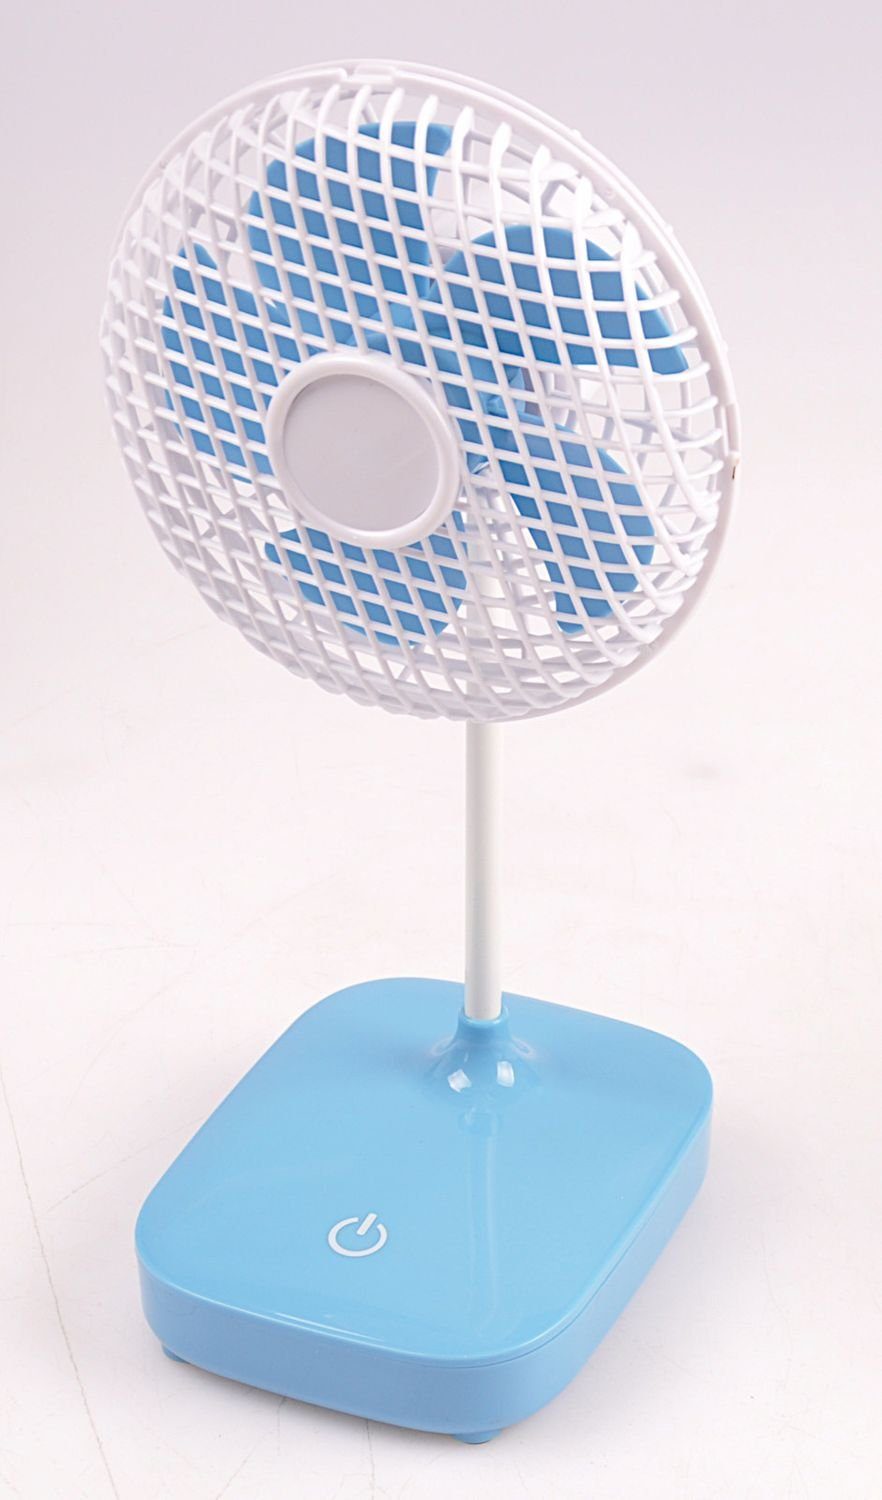 BURI Standventilator Mini-Ventilator Ø13cm Tischventilator Lüfter Kühler Gebläse blau